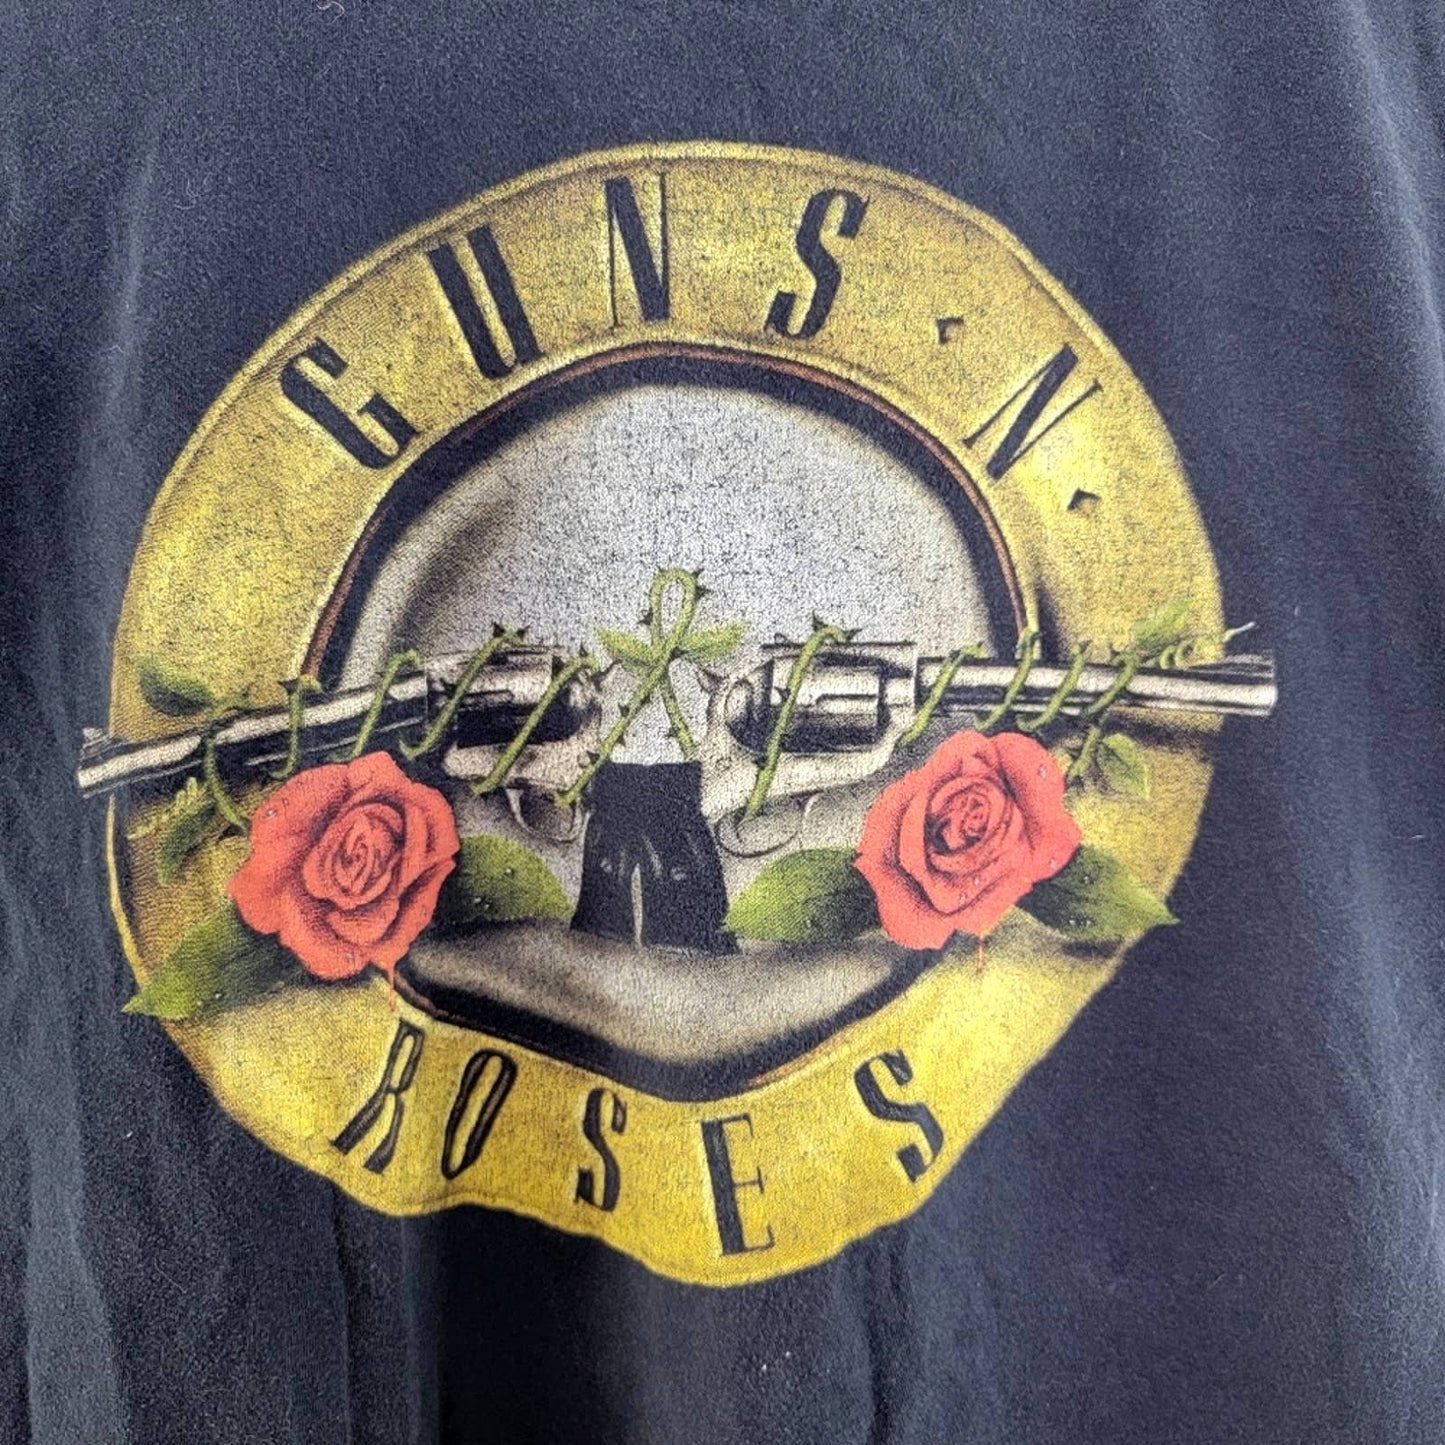 Classic Guns & Roses Band Tee Shirt - M